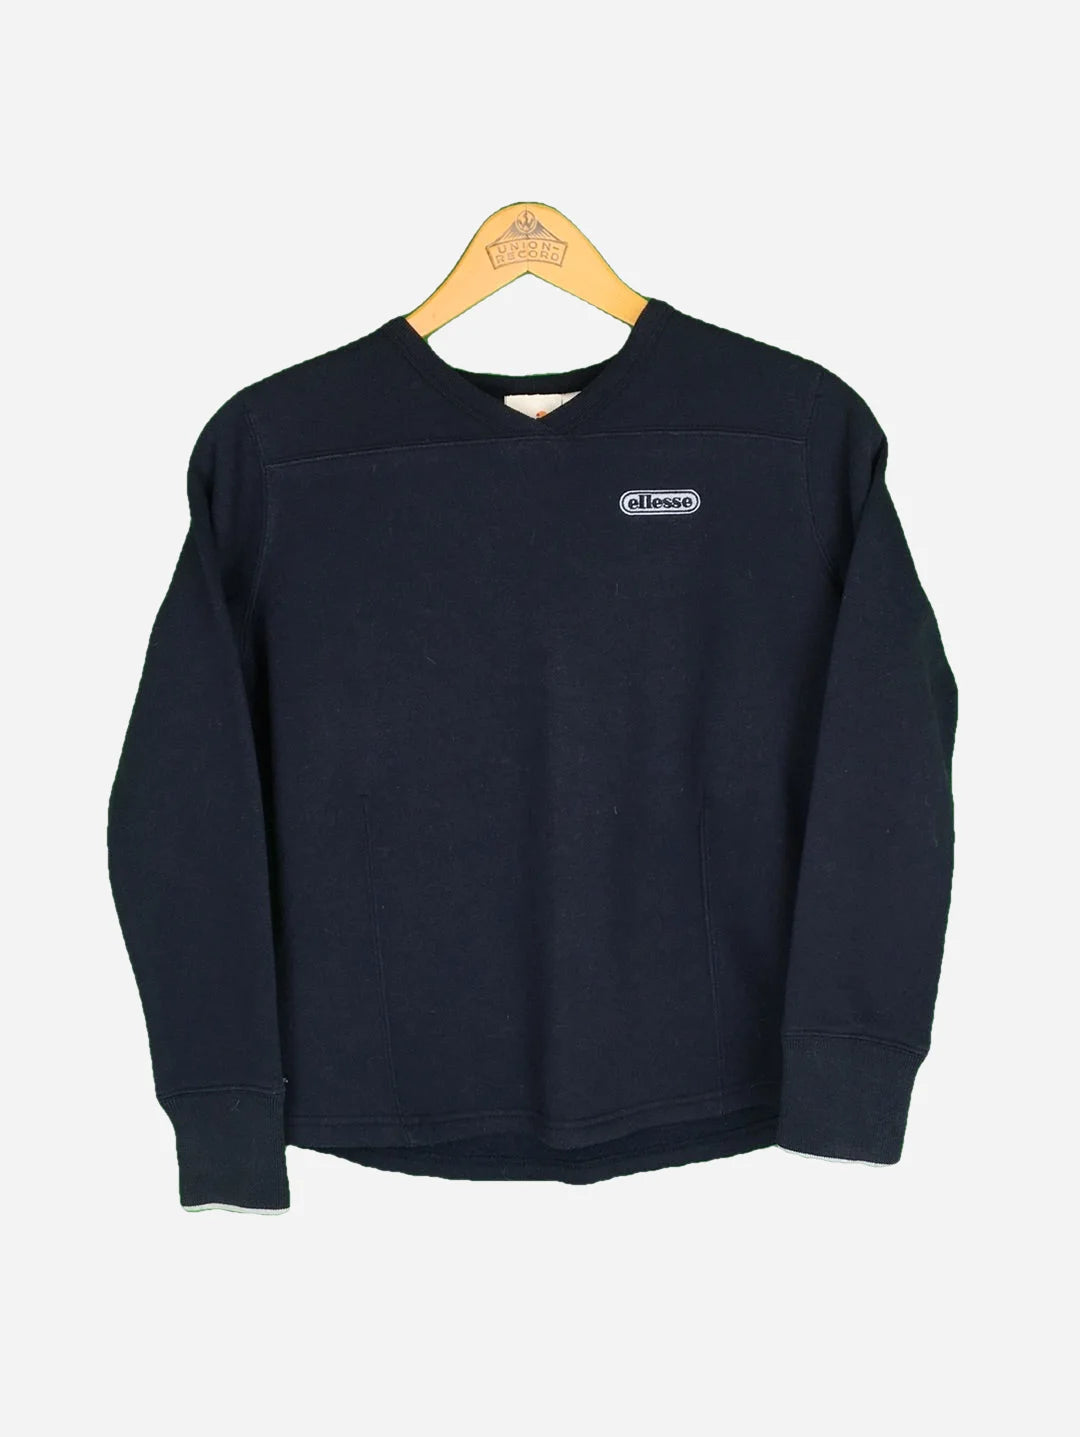 Ellesse Sweater (XS)